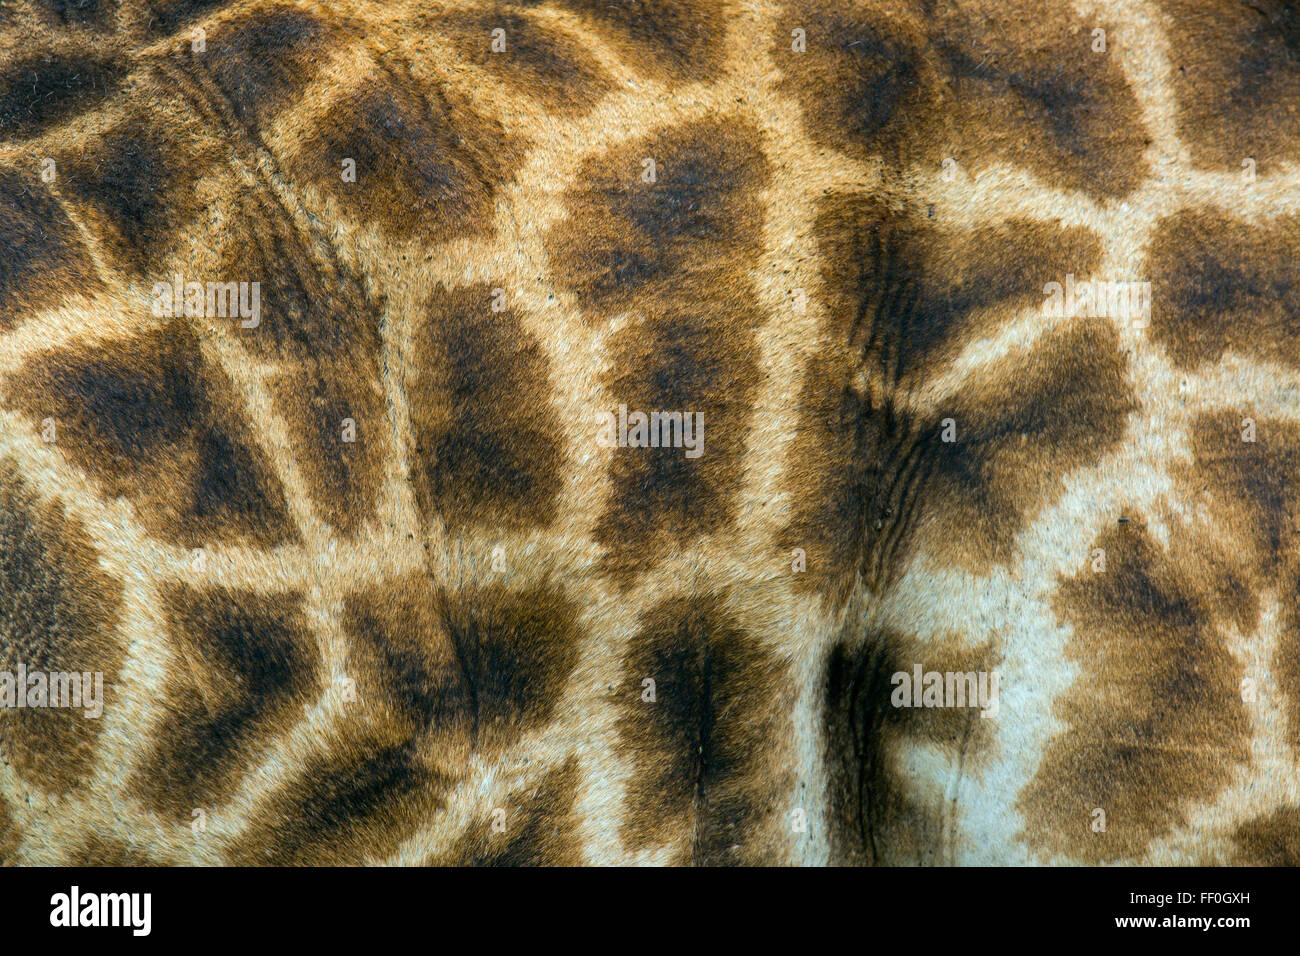 Cape Giraffe Giraffa camelopardalis coat pattern Stock Photo